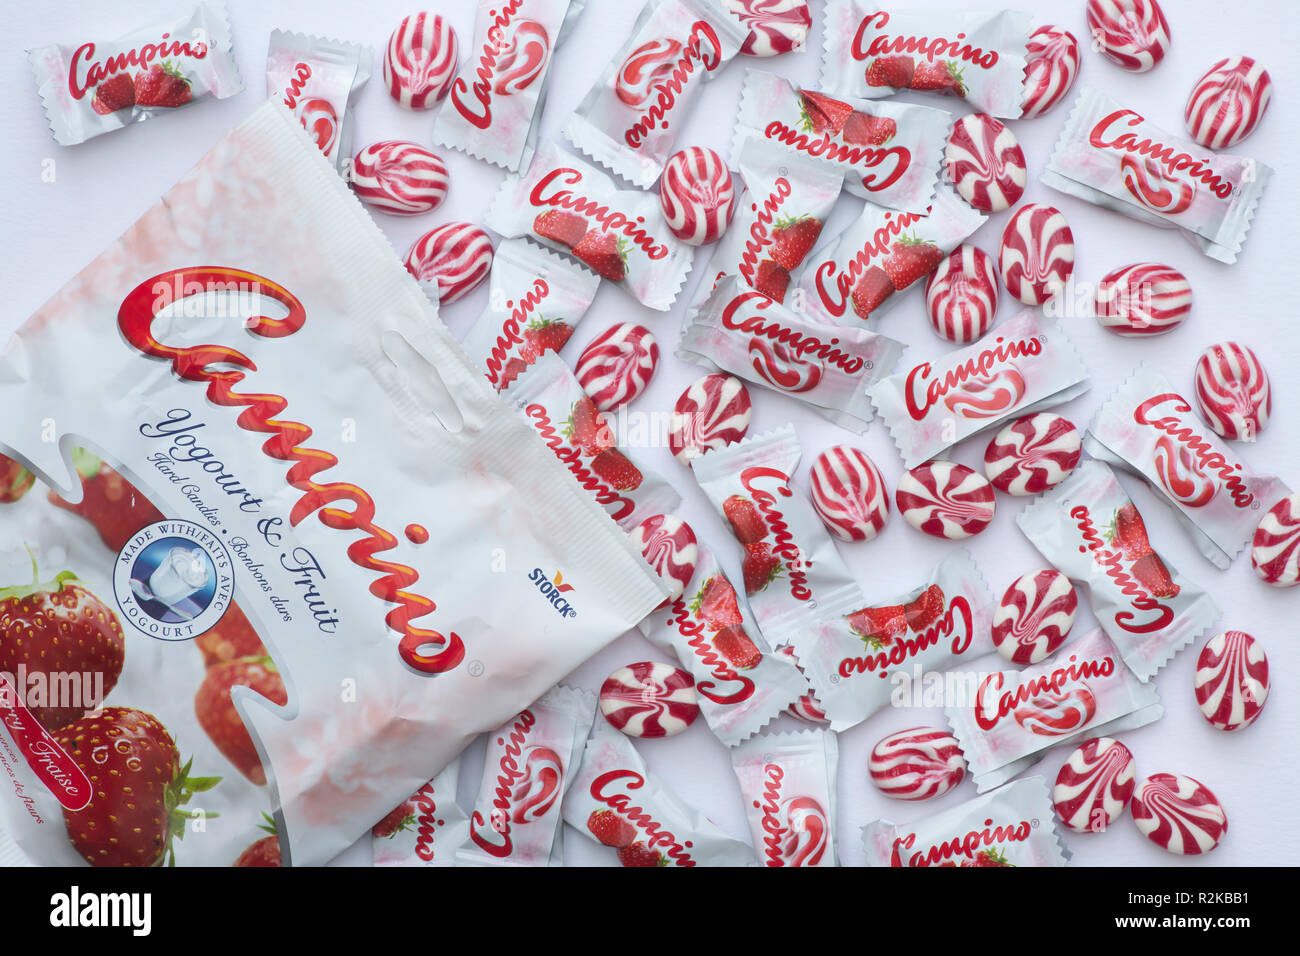 Campino joghurt bonbons -Fotos und -Bildmaterial in hoher Auflösung – Alamy